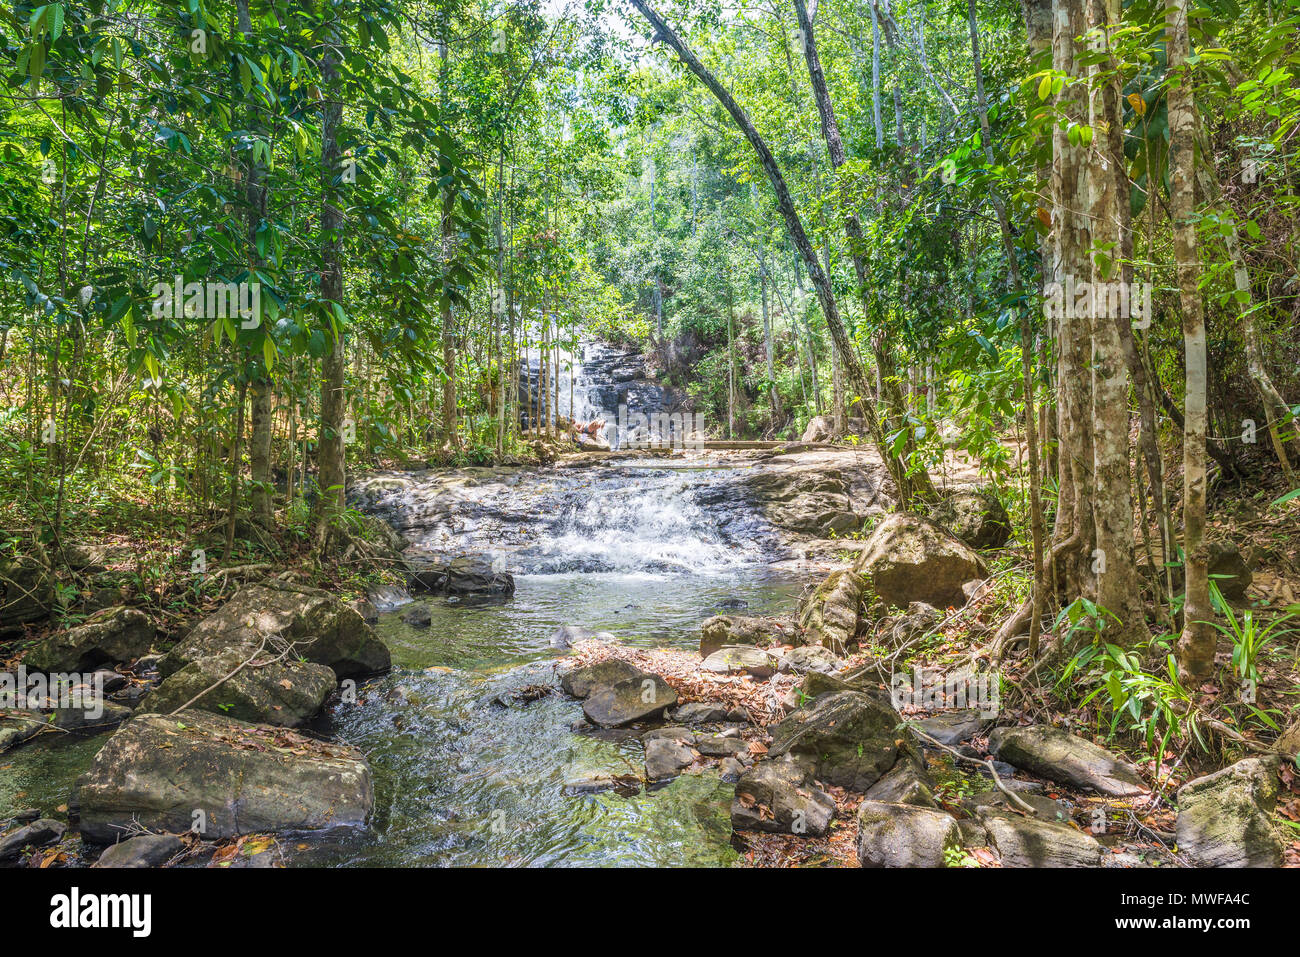 Itacaré, Brasilien - Dezember 9, 2016: Wasserfall und Bach im Wald in Itacaré Bahia Brasilien Stockfoto